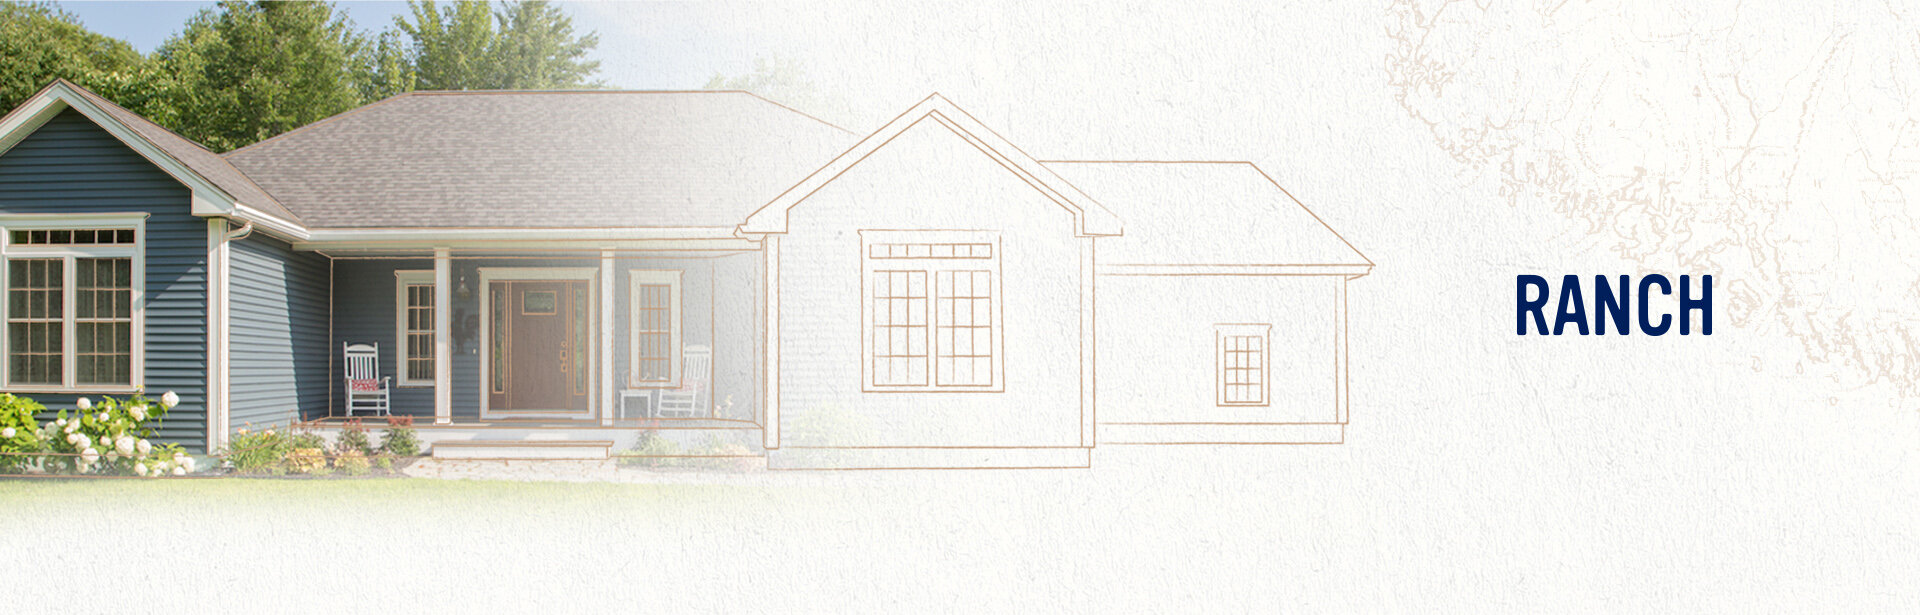 New-Home-Designs-Banner-Ranch (1).jpg